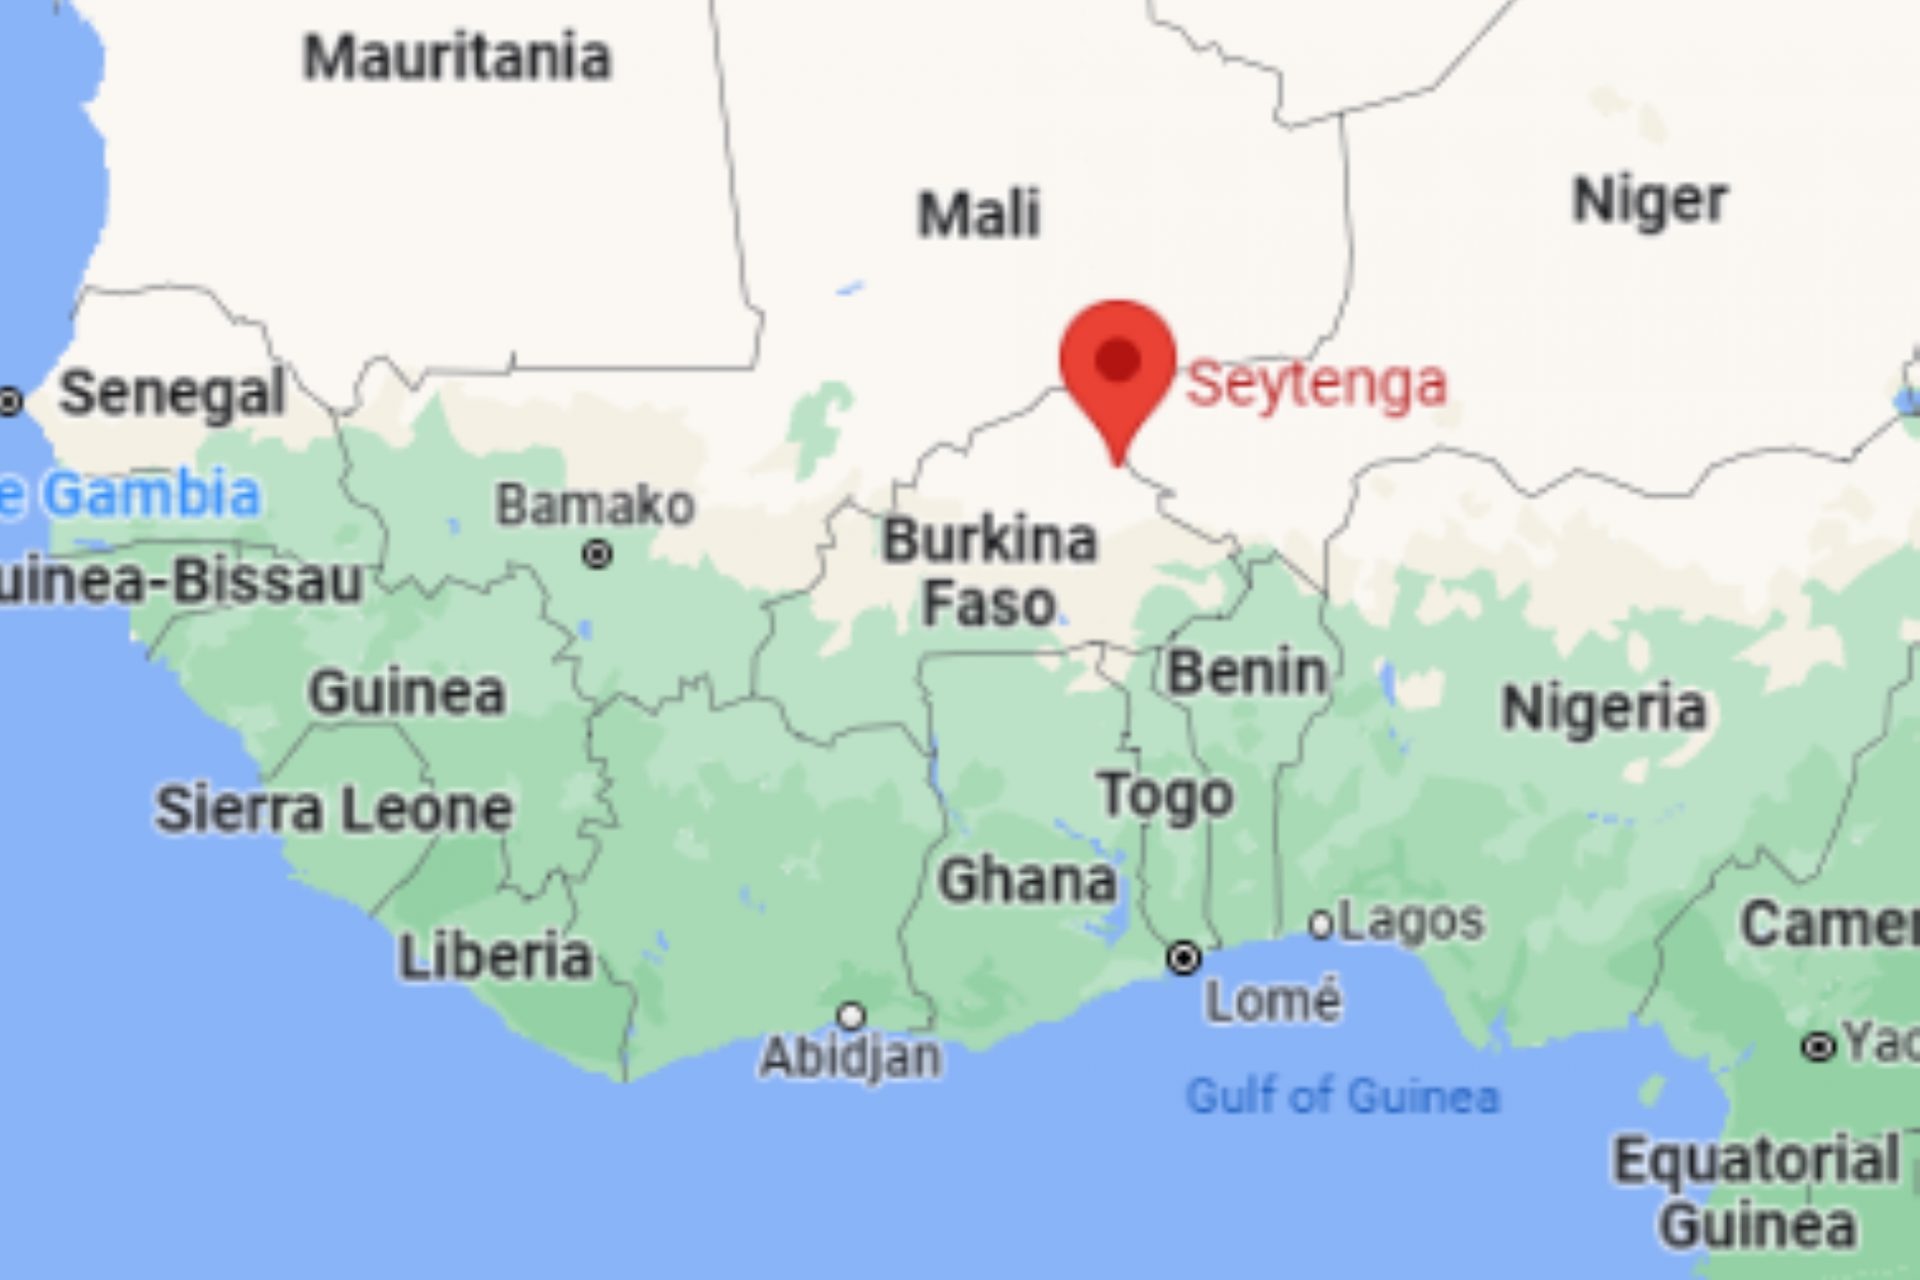 Seytenga, Burkina Faso